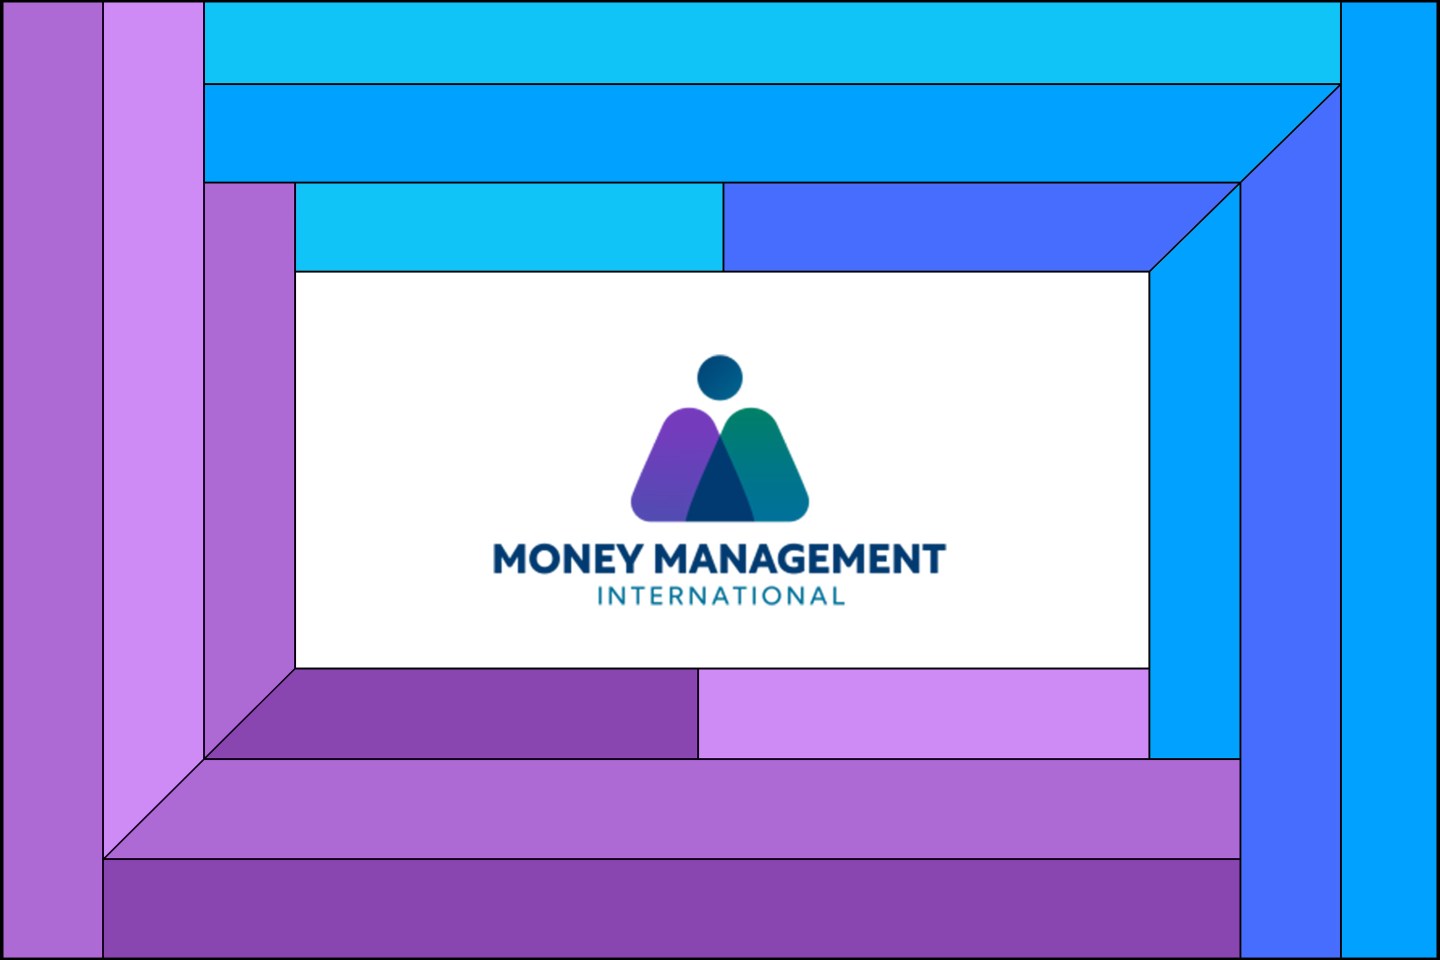 Illustration of the Money Management International logo inside a blue and purple frame.